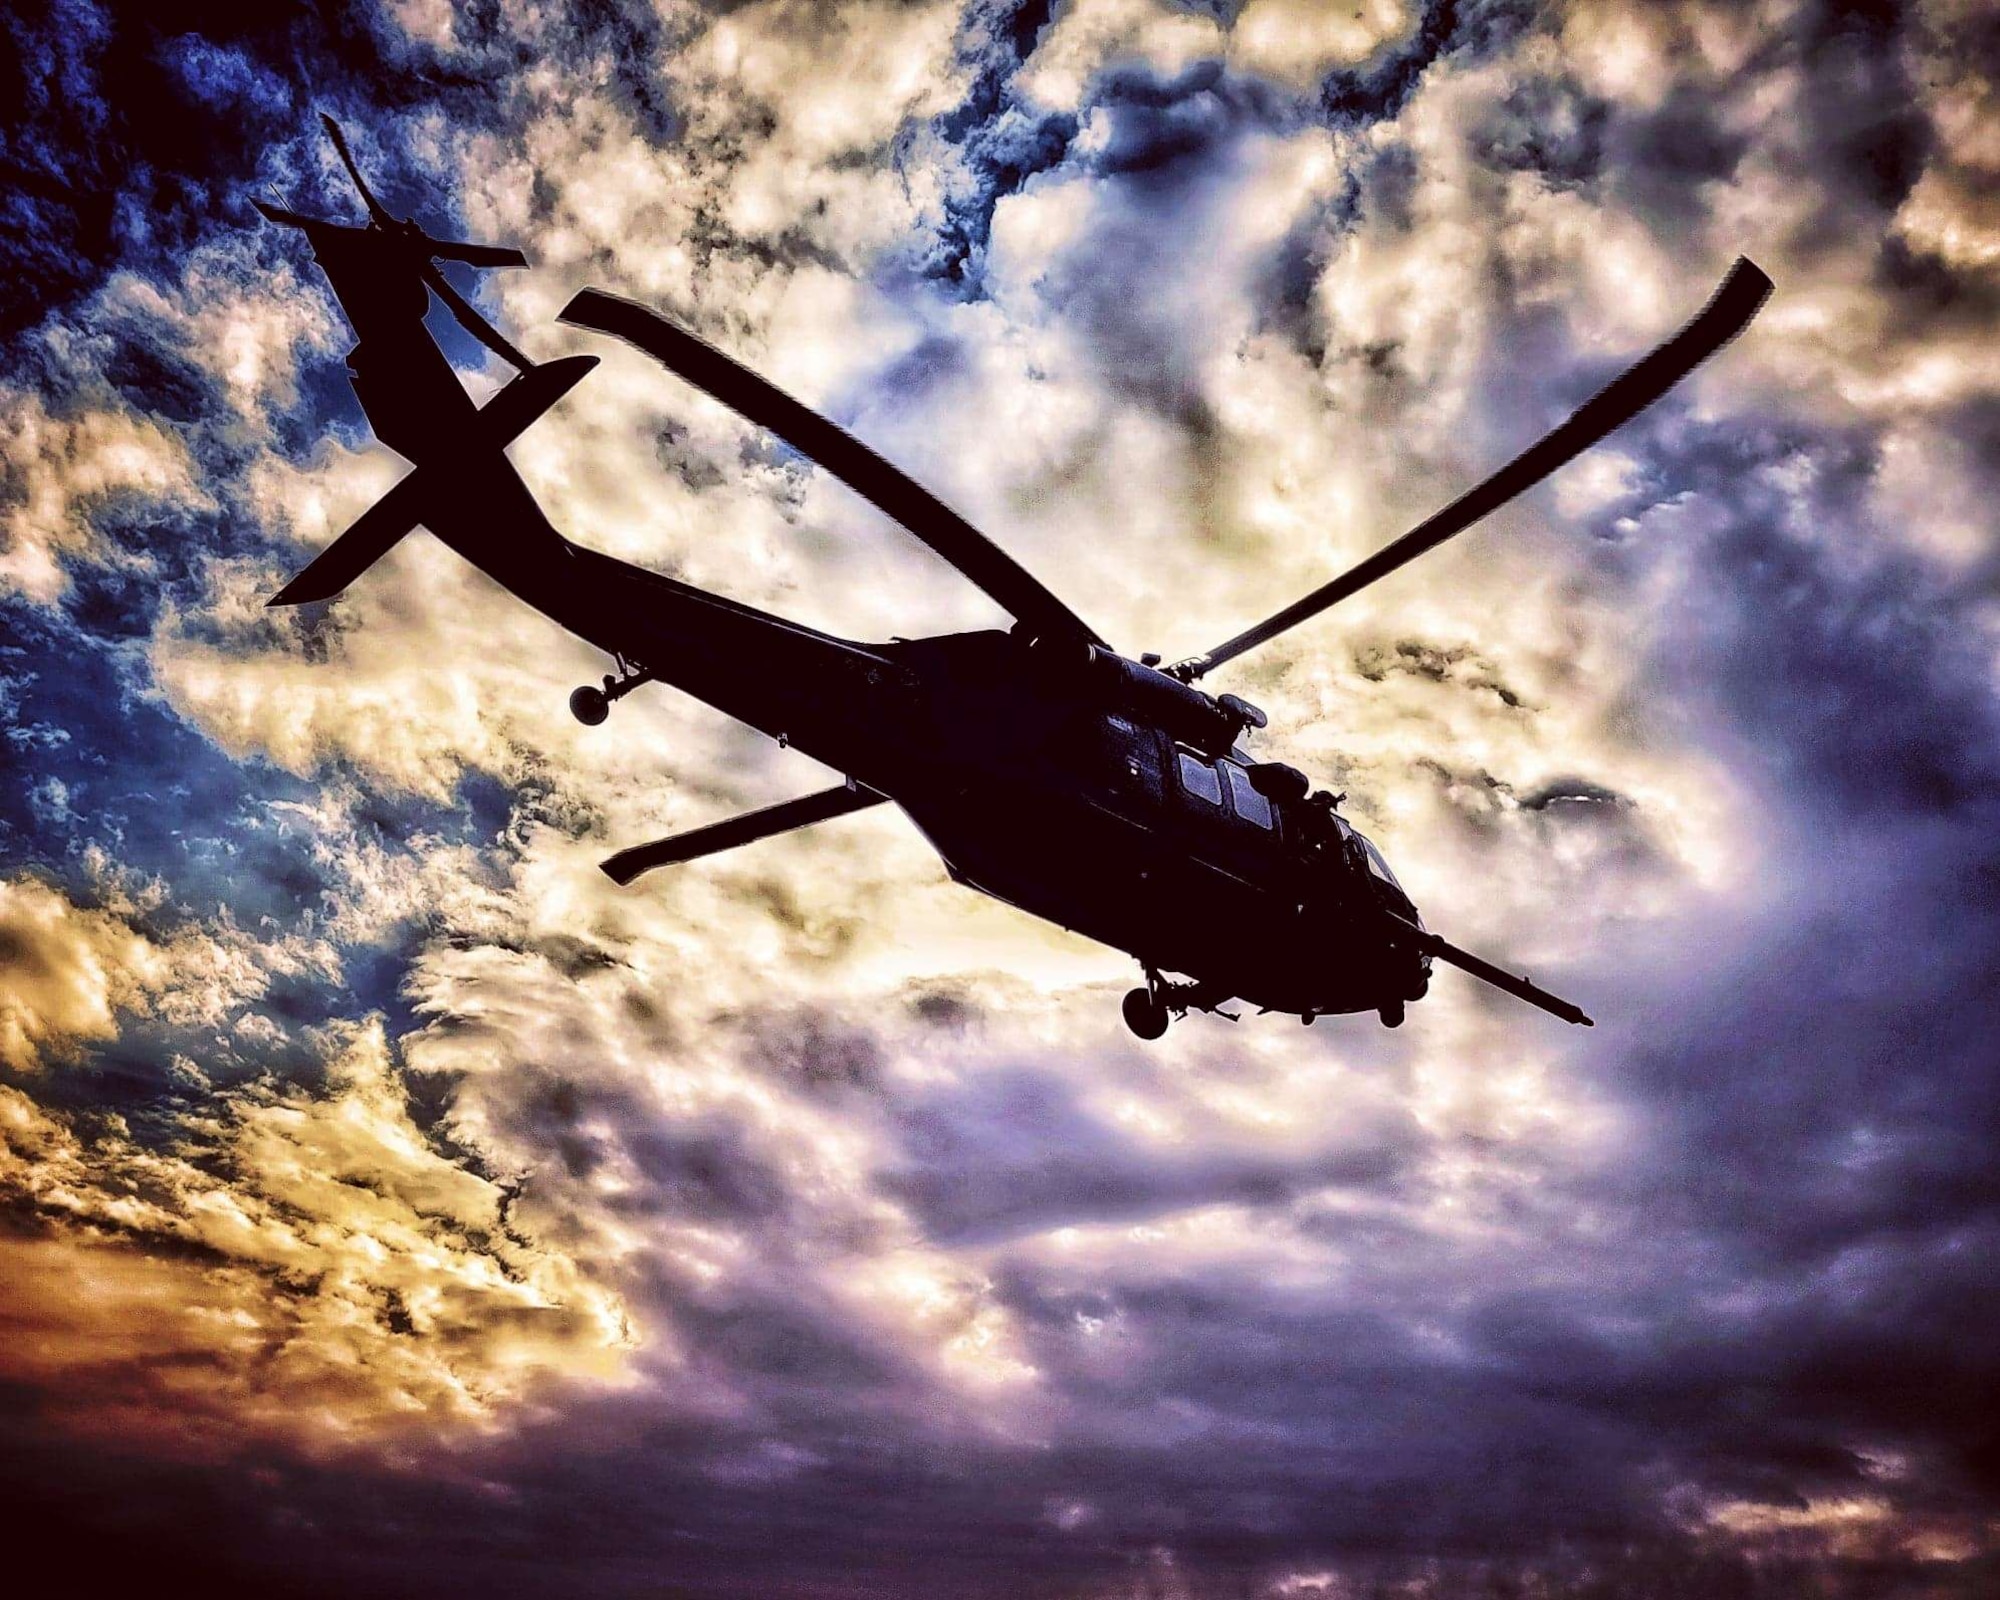 A photo of an HH-60G Pave Hawk